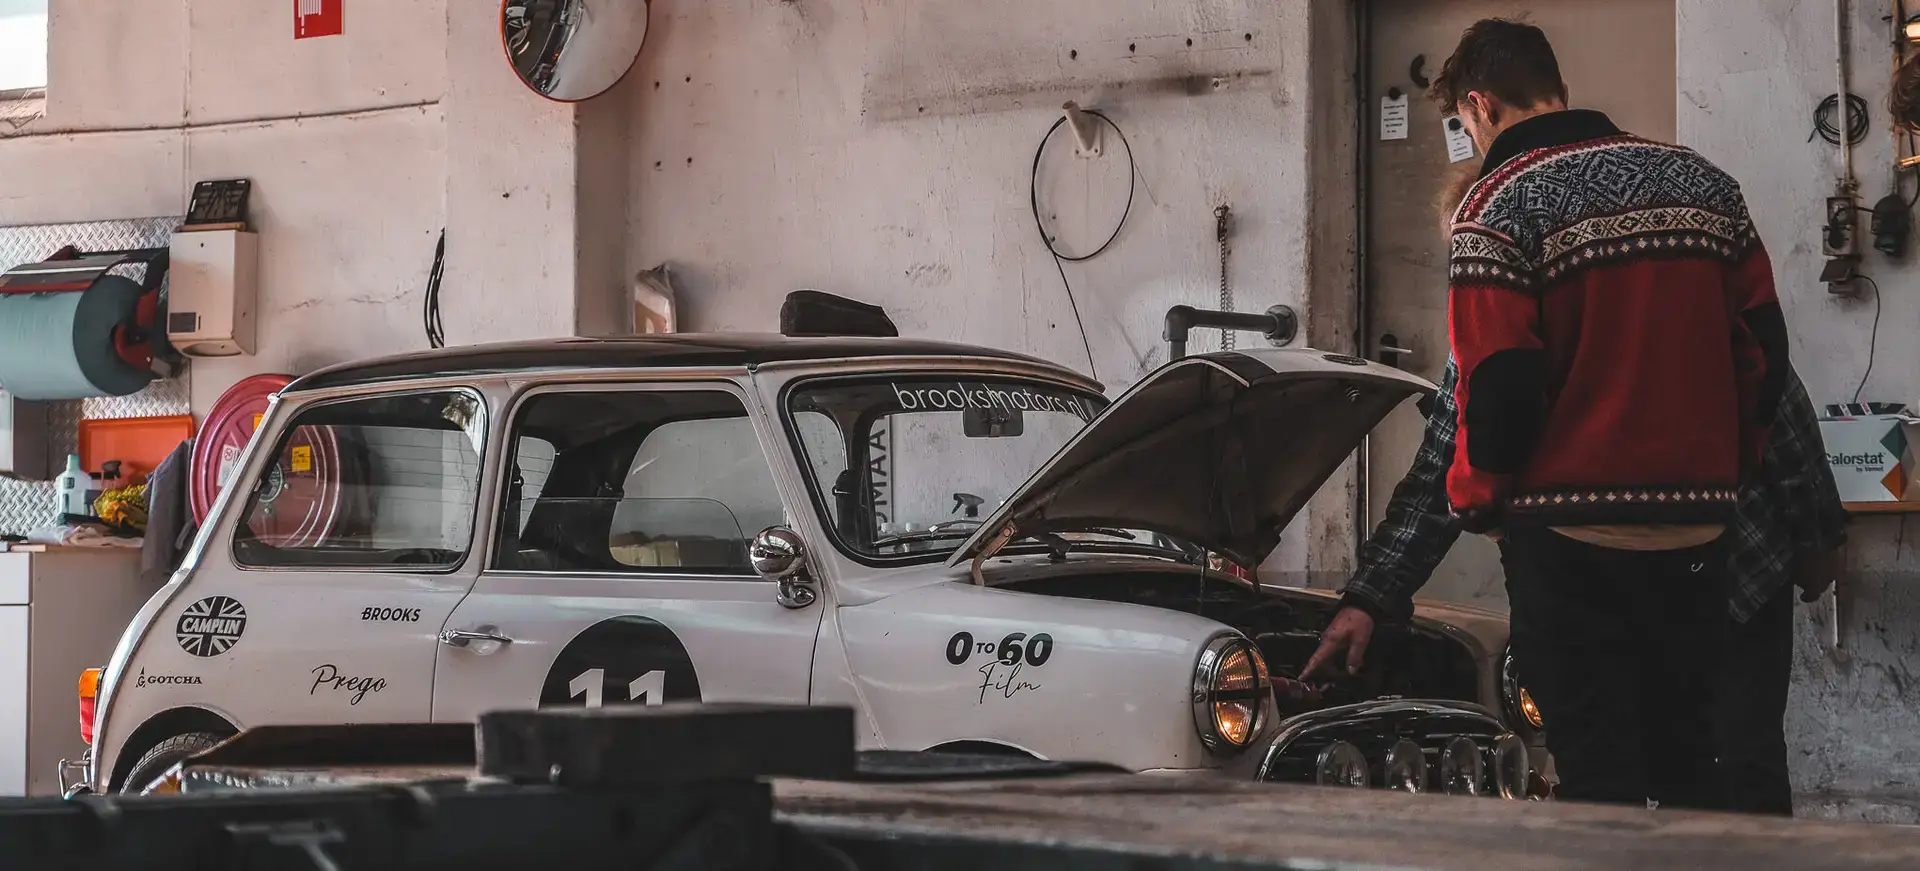 mini cooper classic rally FIA mk3 in garage under hood